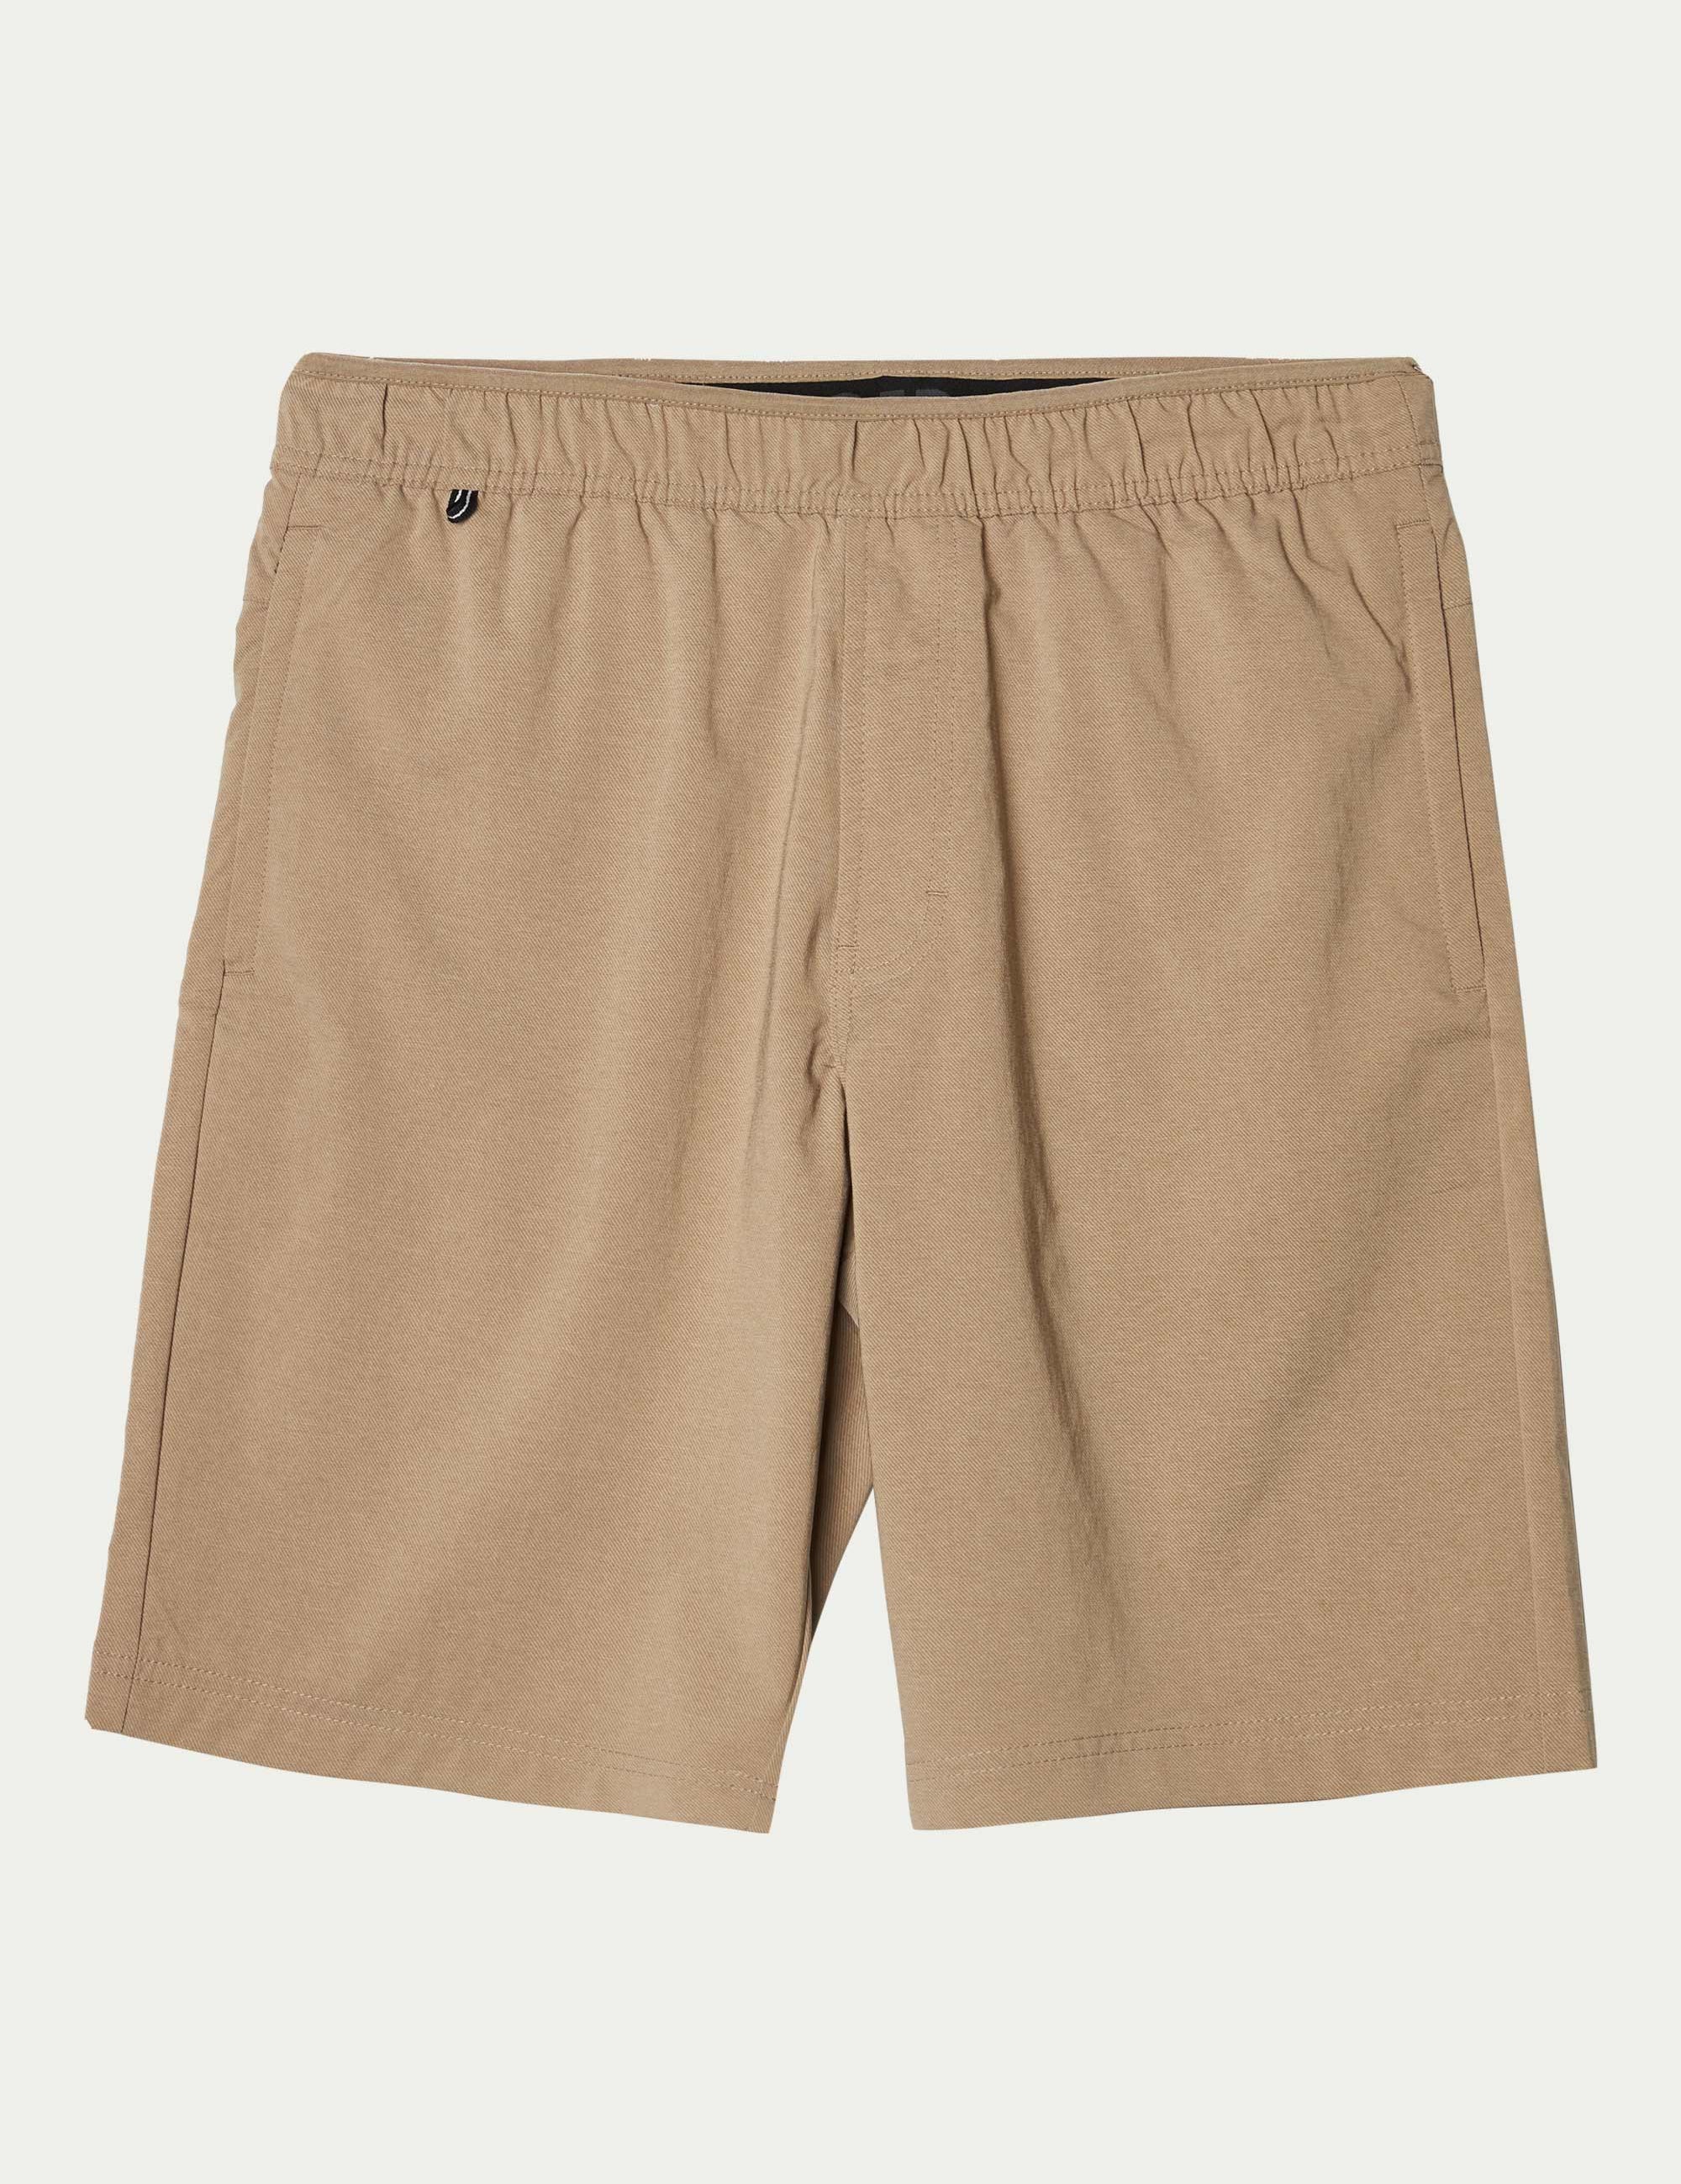 Canyon E-Waist Shorts - Black | Voyager Goods